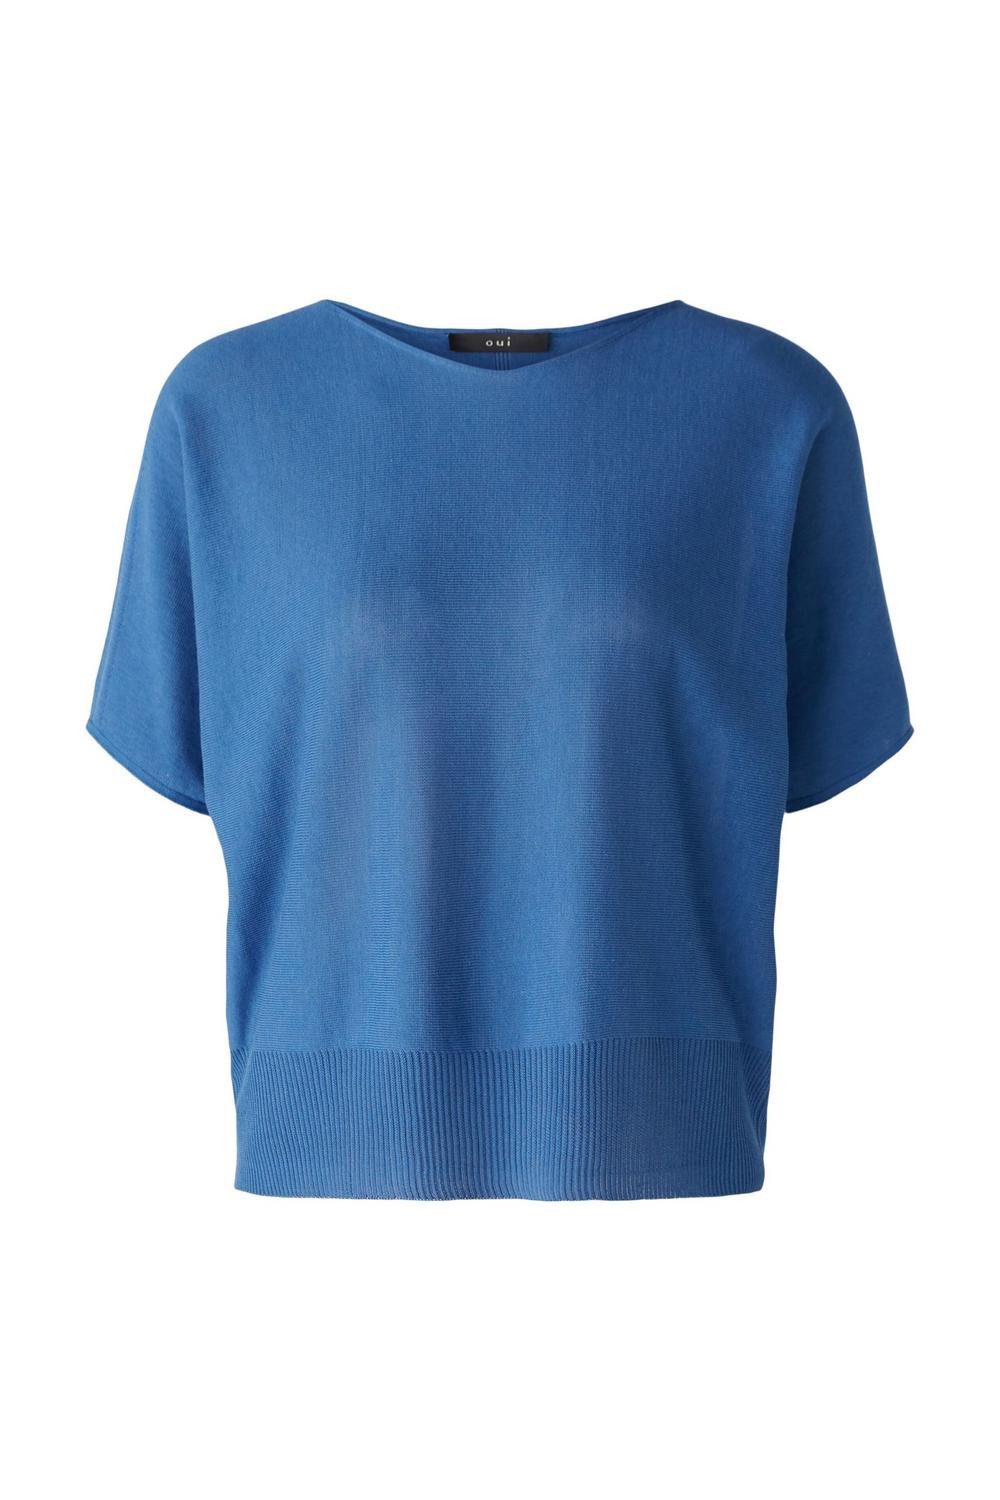 Oui Sweatshirt Pullover, bright cobalt